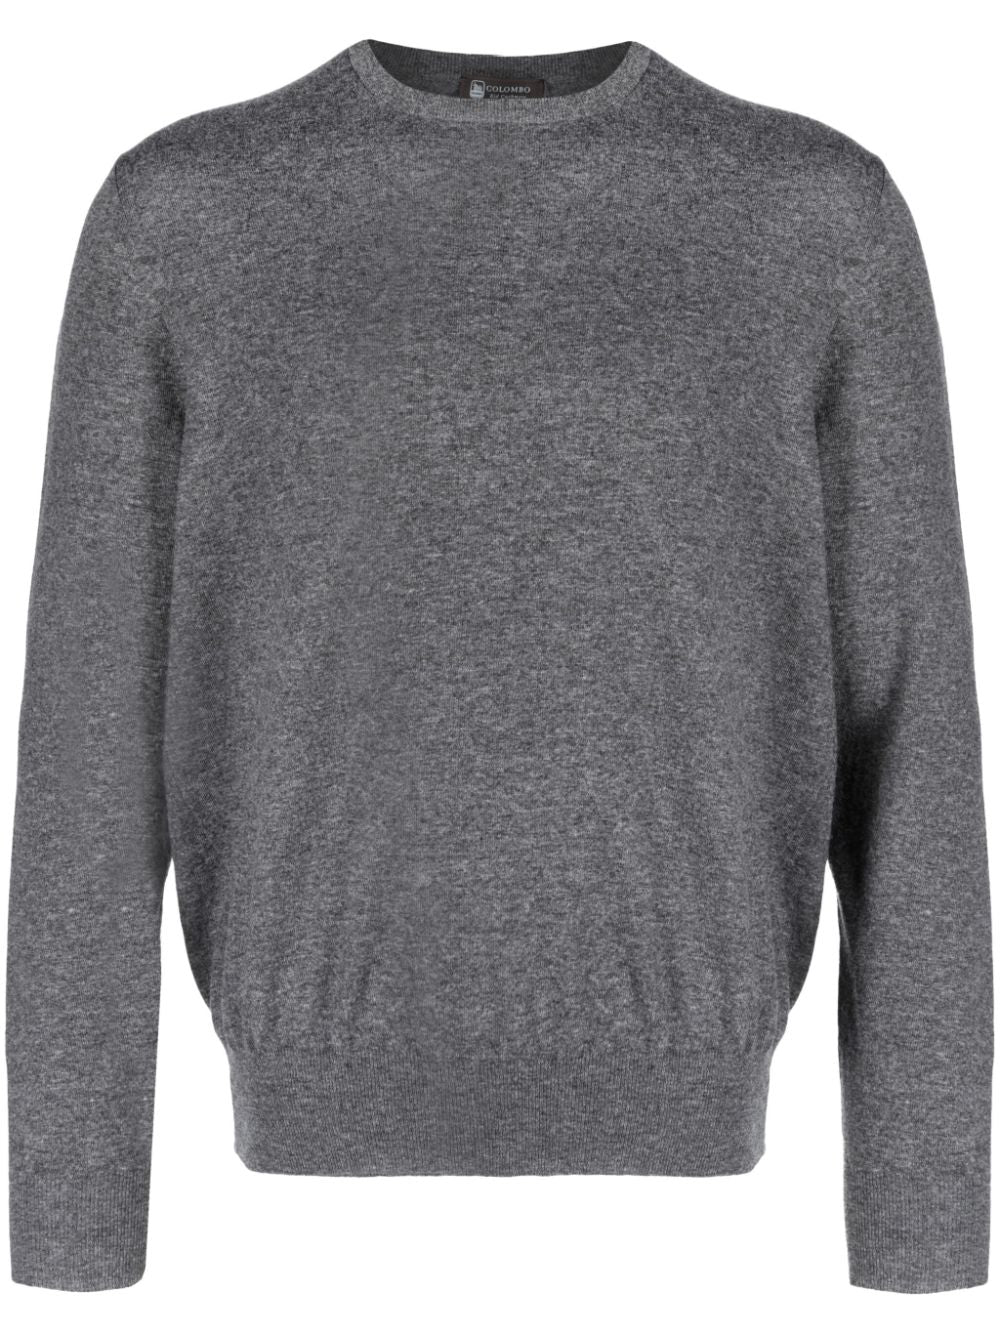 COLOMBO Gray Cashmere-Blend Crewneck Sweater